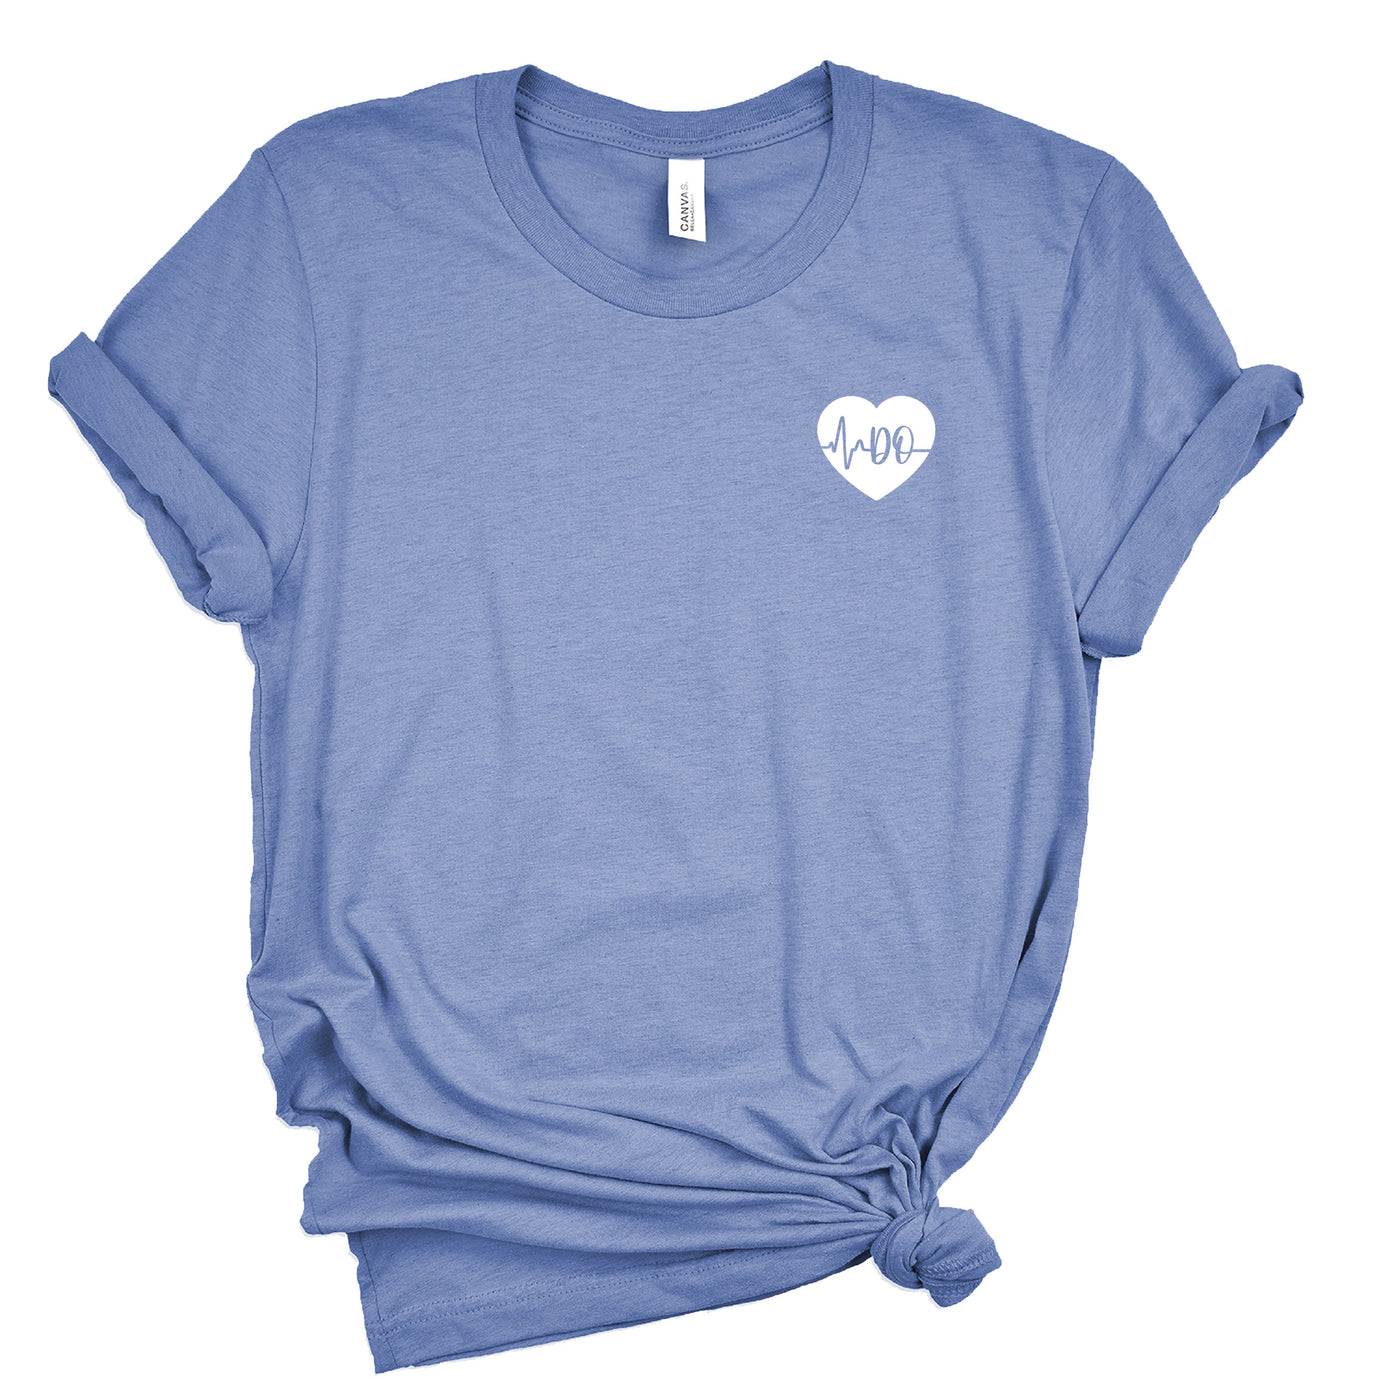 DO ECG Heart - Shirt